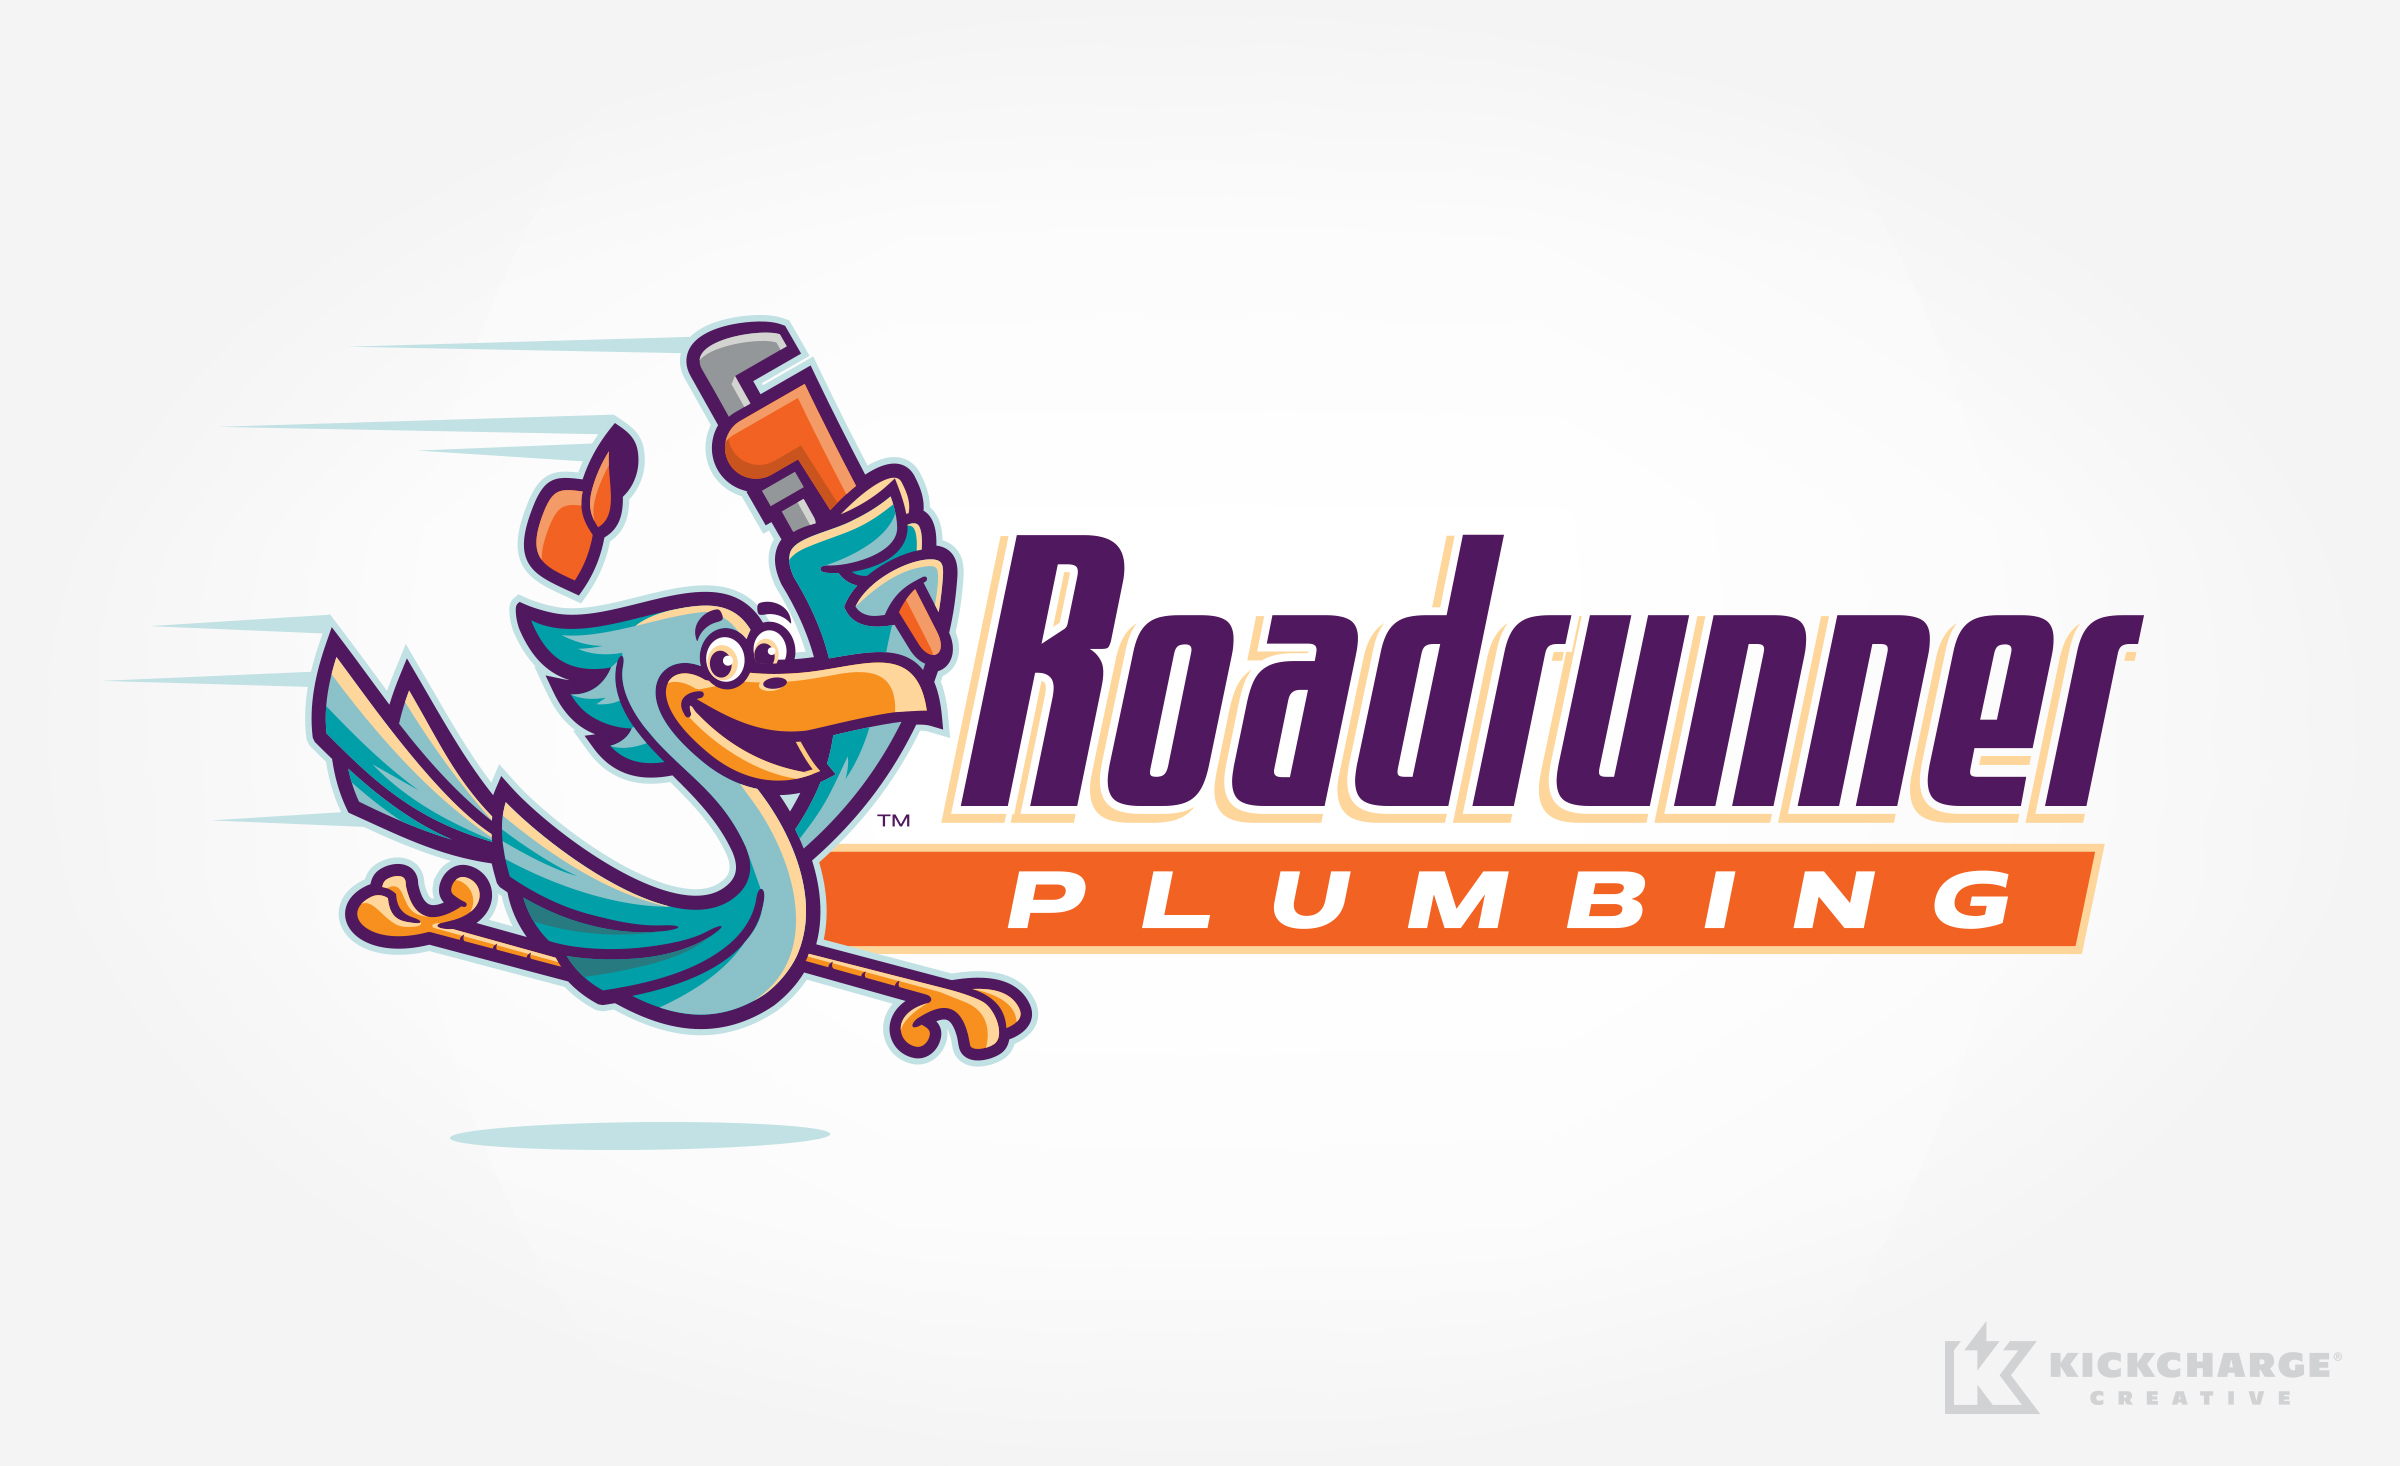 plumbing logo for Roadrunner Plumbing